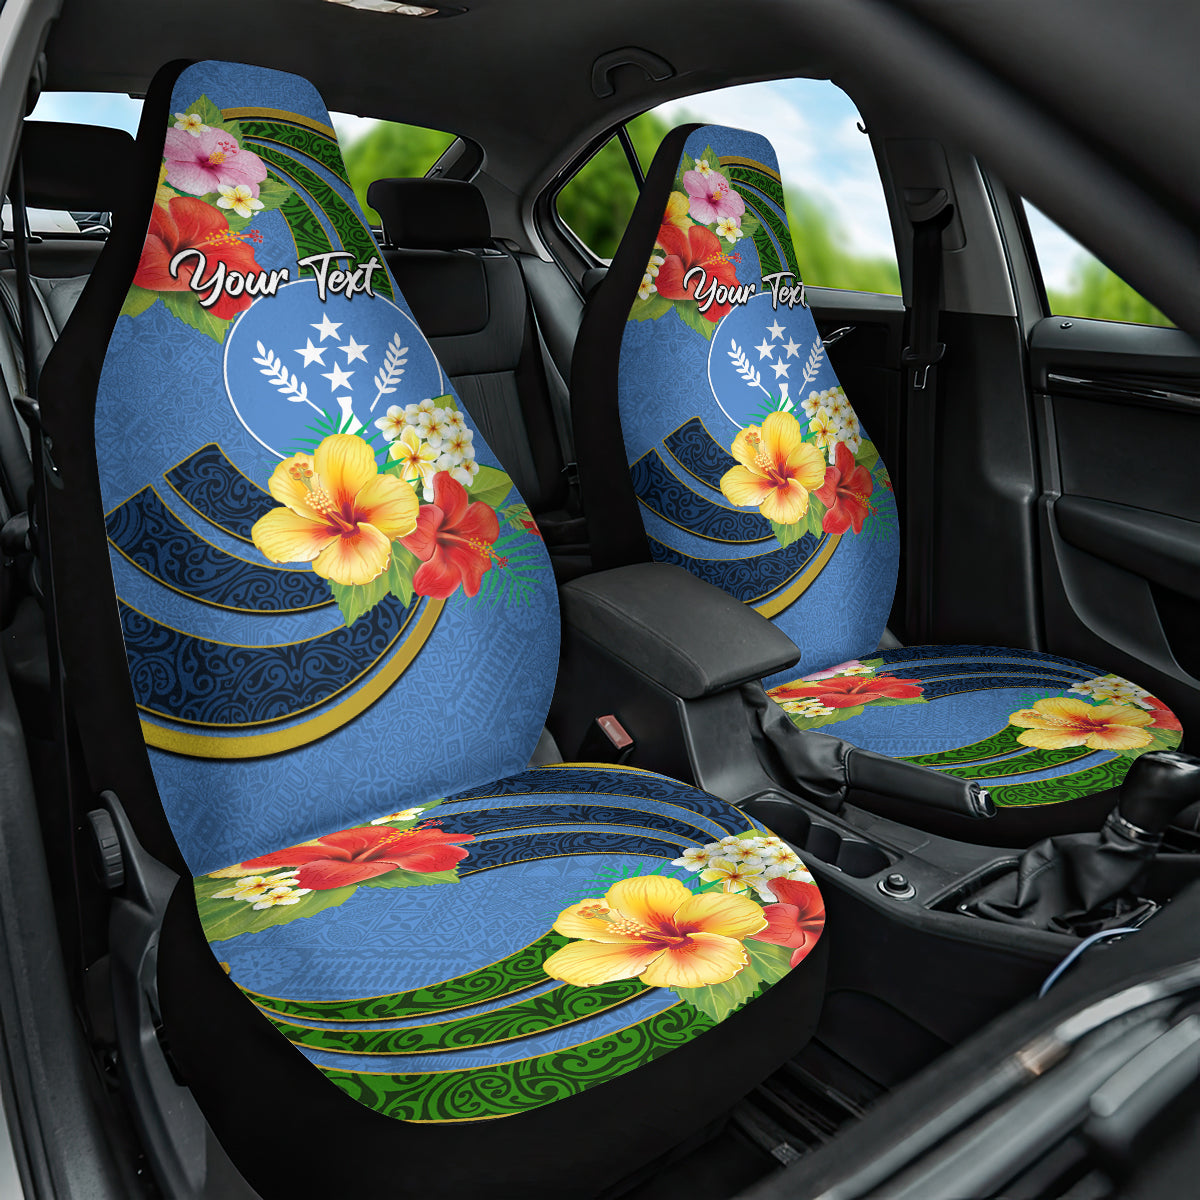 Kosrae Car Seat Cover Hibiscus Mix Maori Tattoo Pattern LT03 One Size Blue - Polynesian Pride